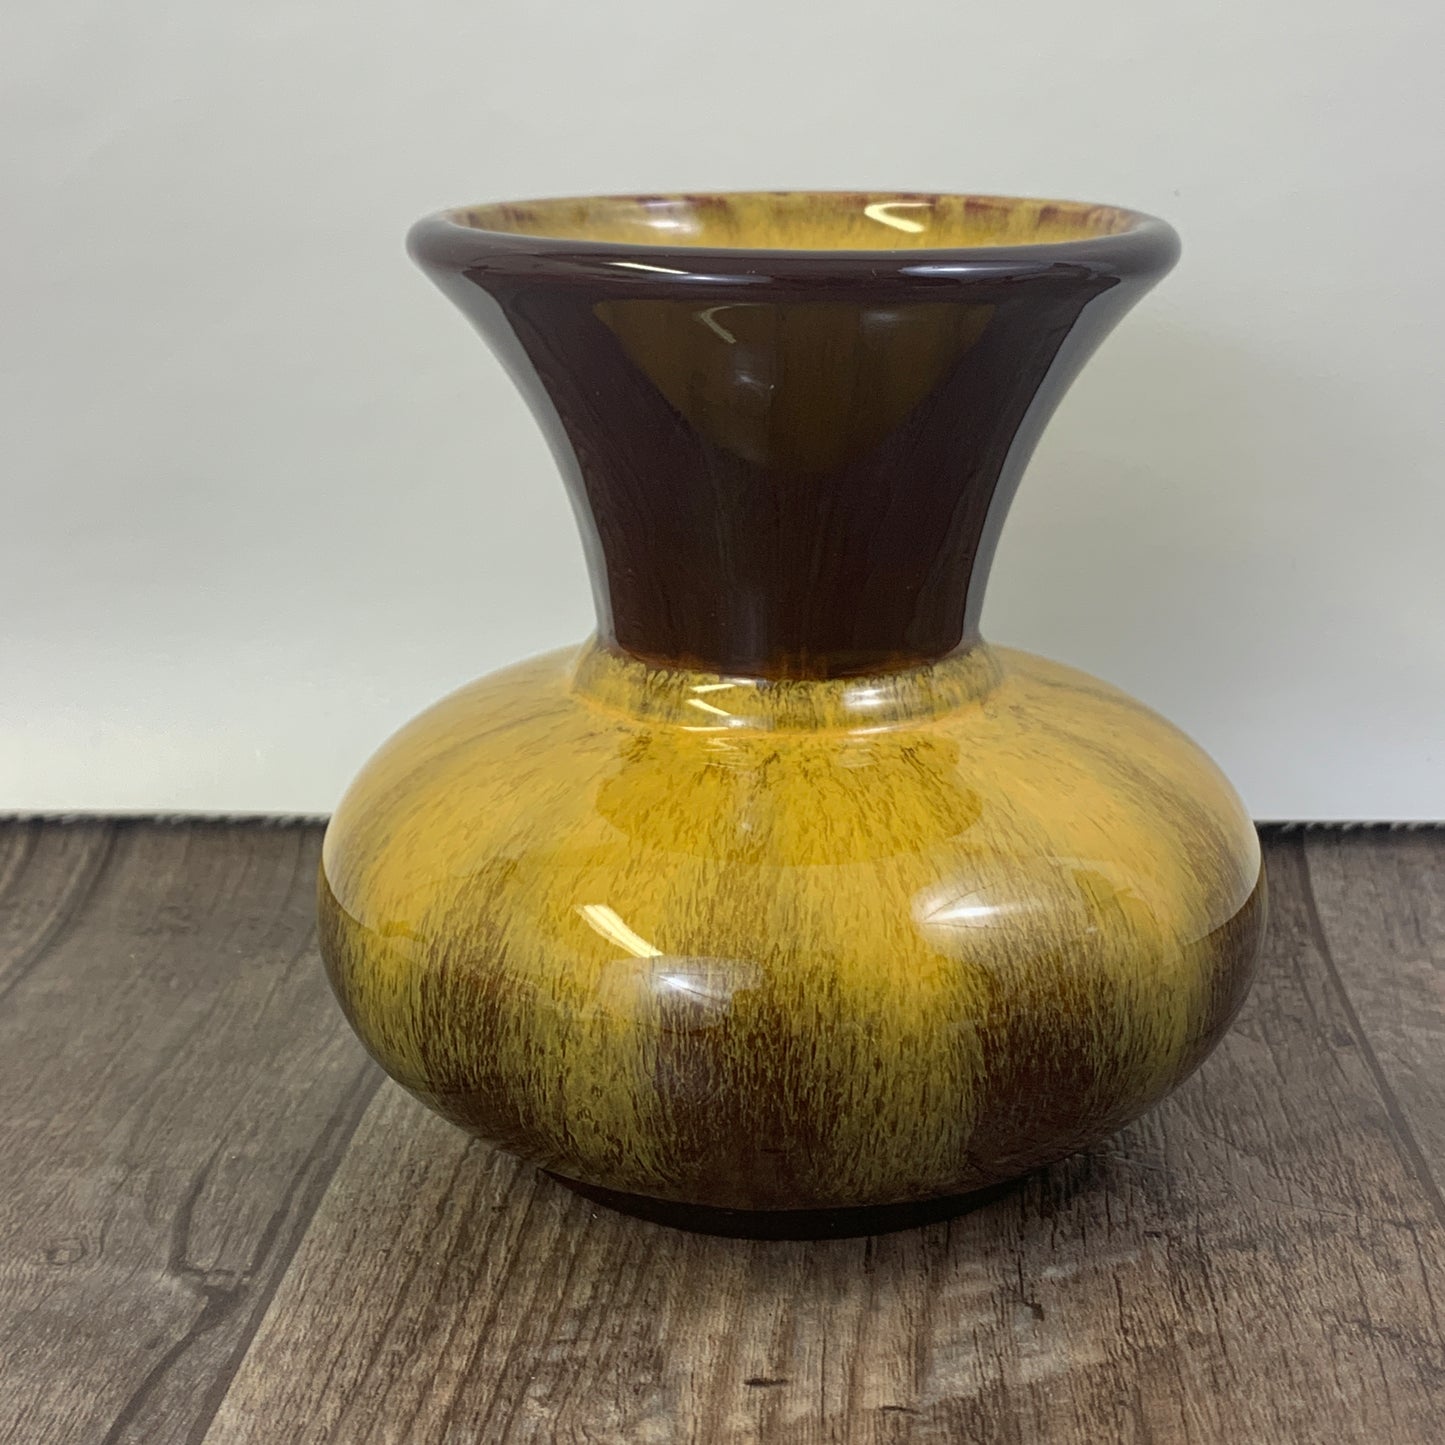 Harvest Gold Vintage 70s Pottery Vase, Brown and Gold Drip Glaze Pottery Vase